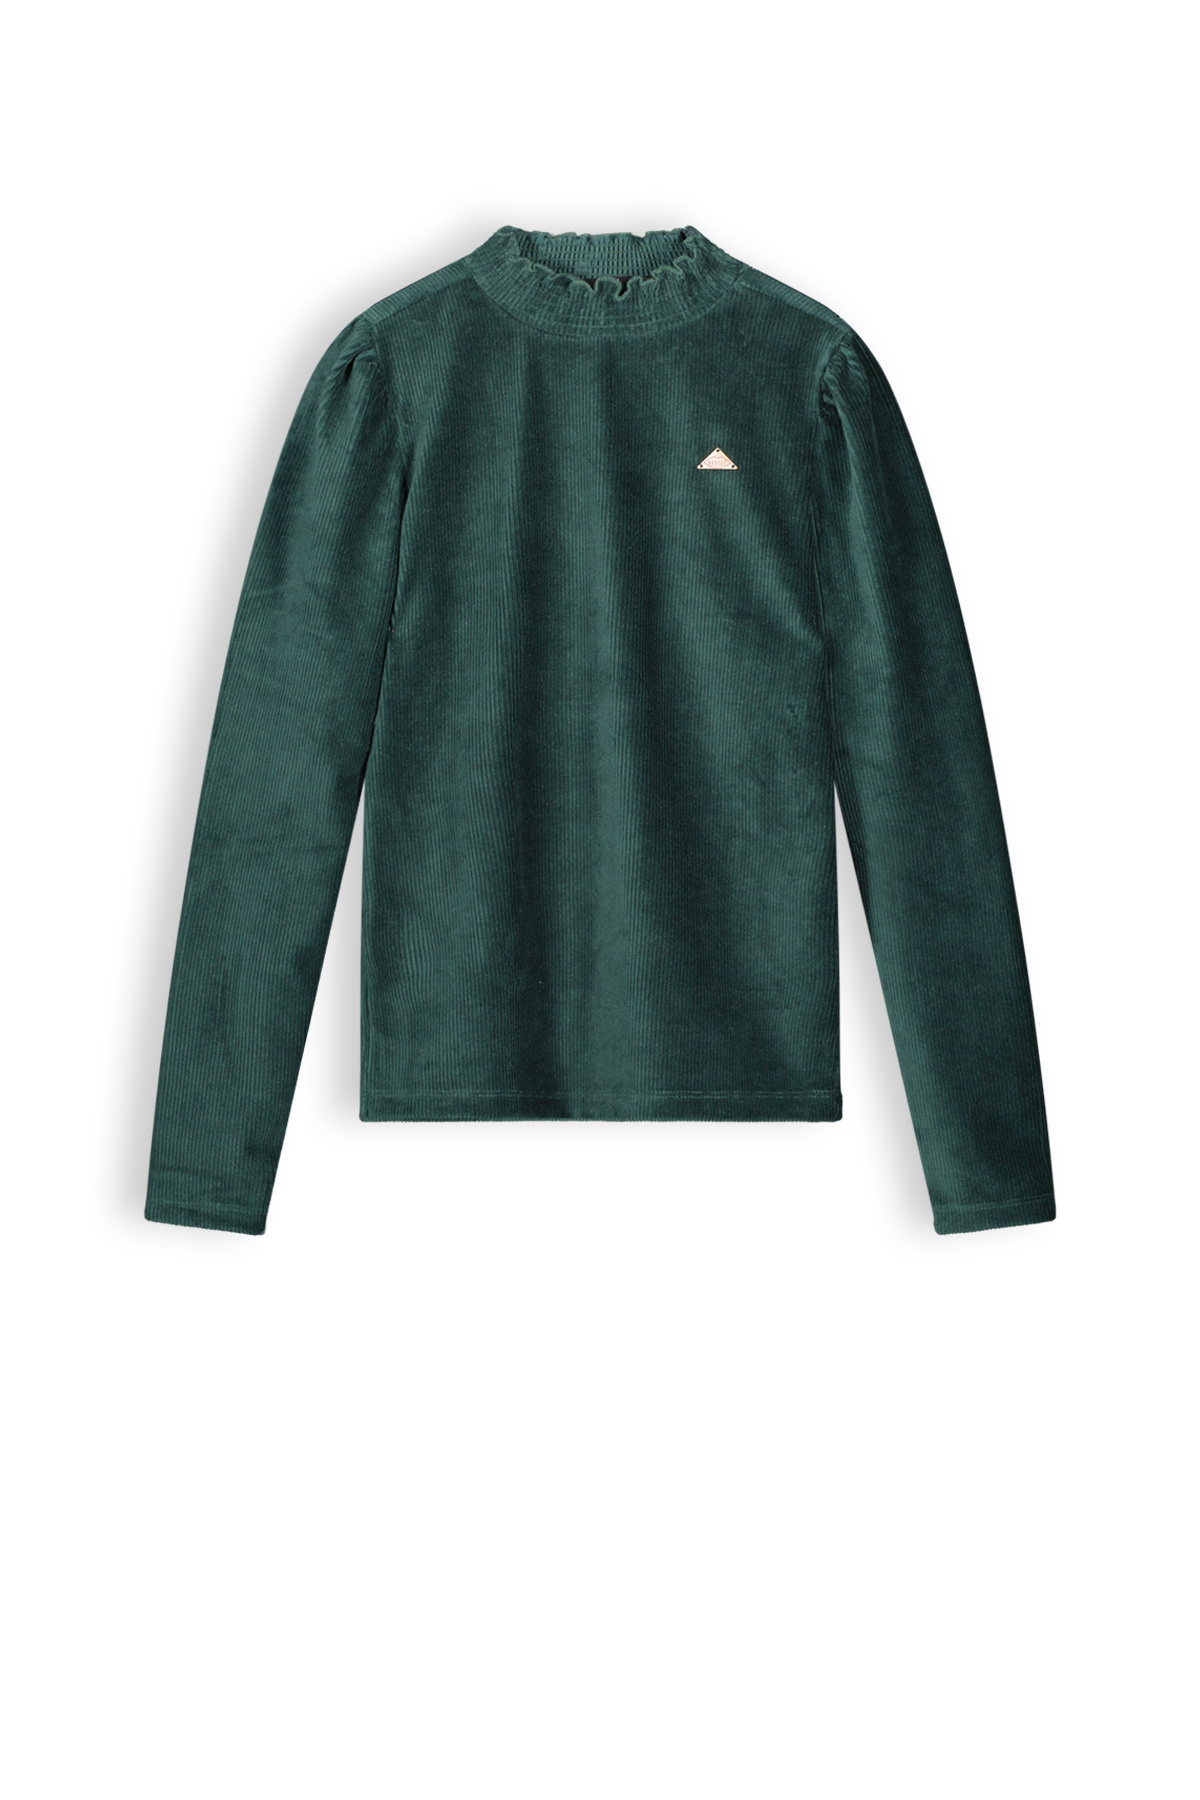 Meisjes shirt rib velours - Kobus - Pine groen